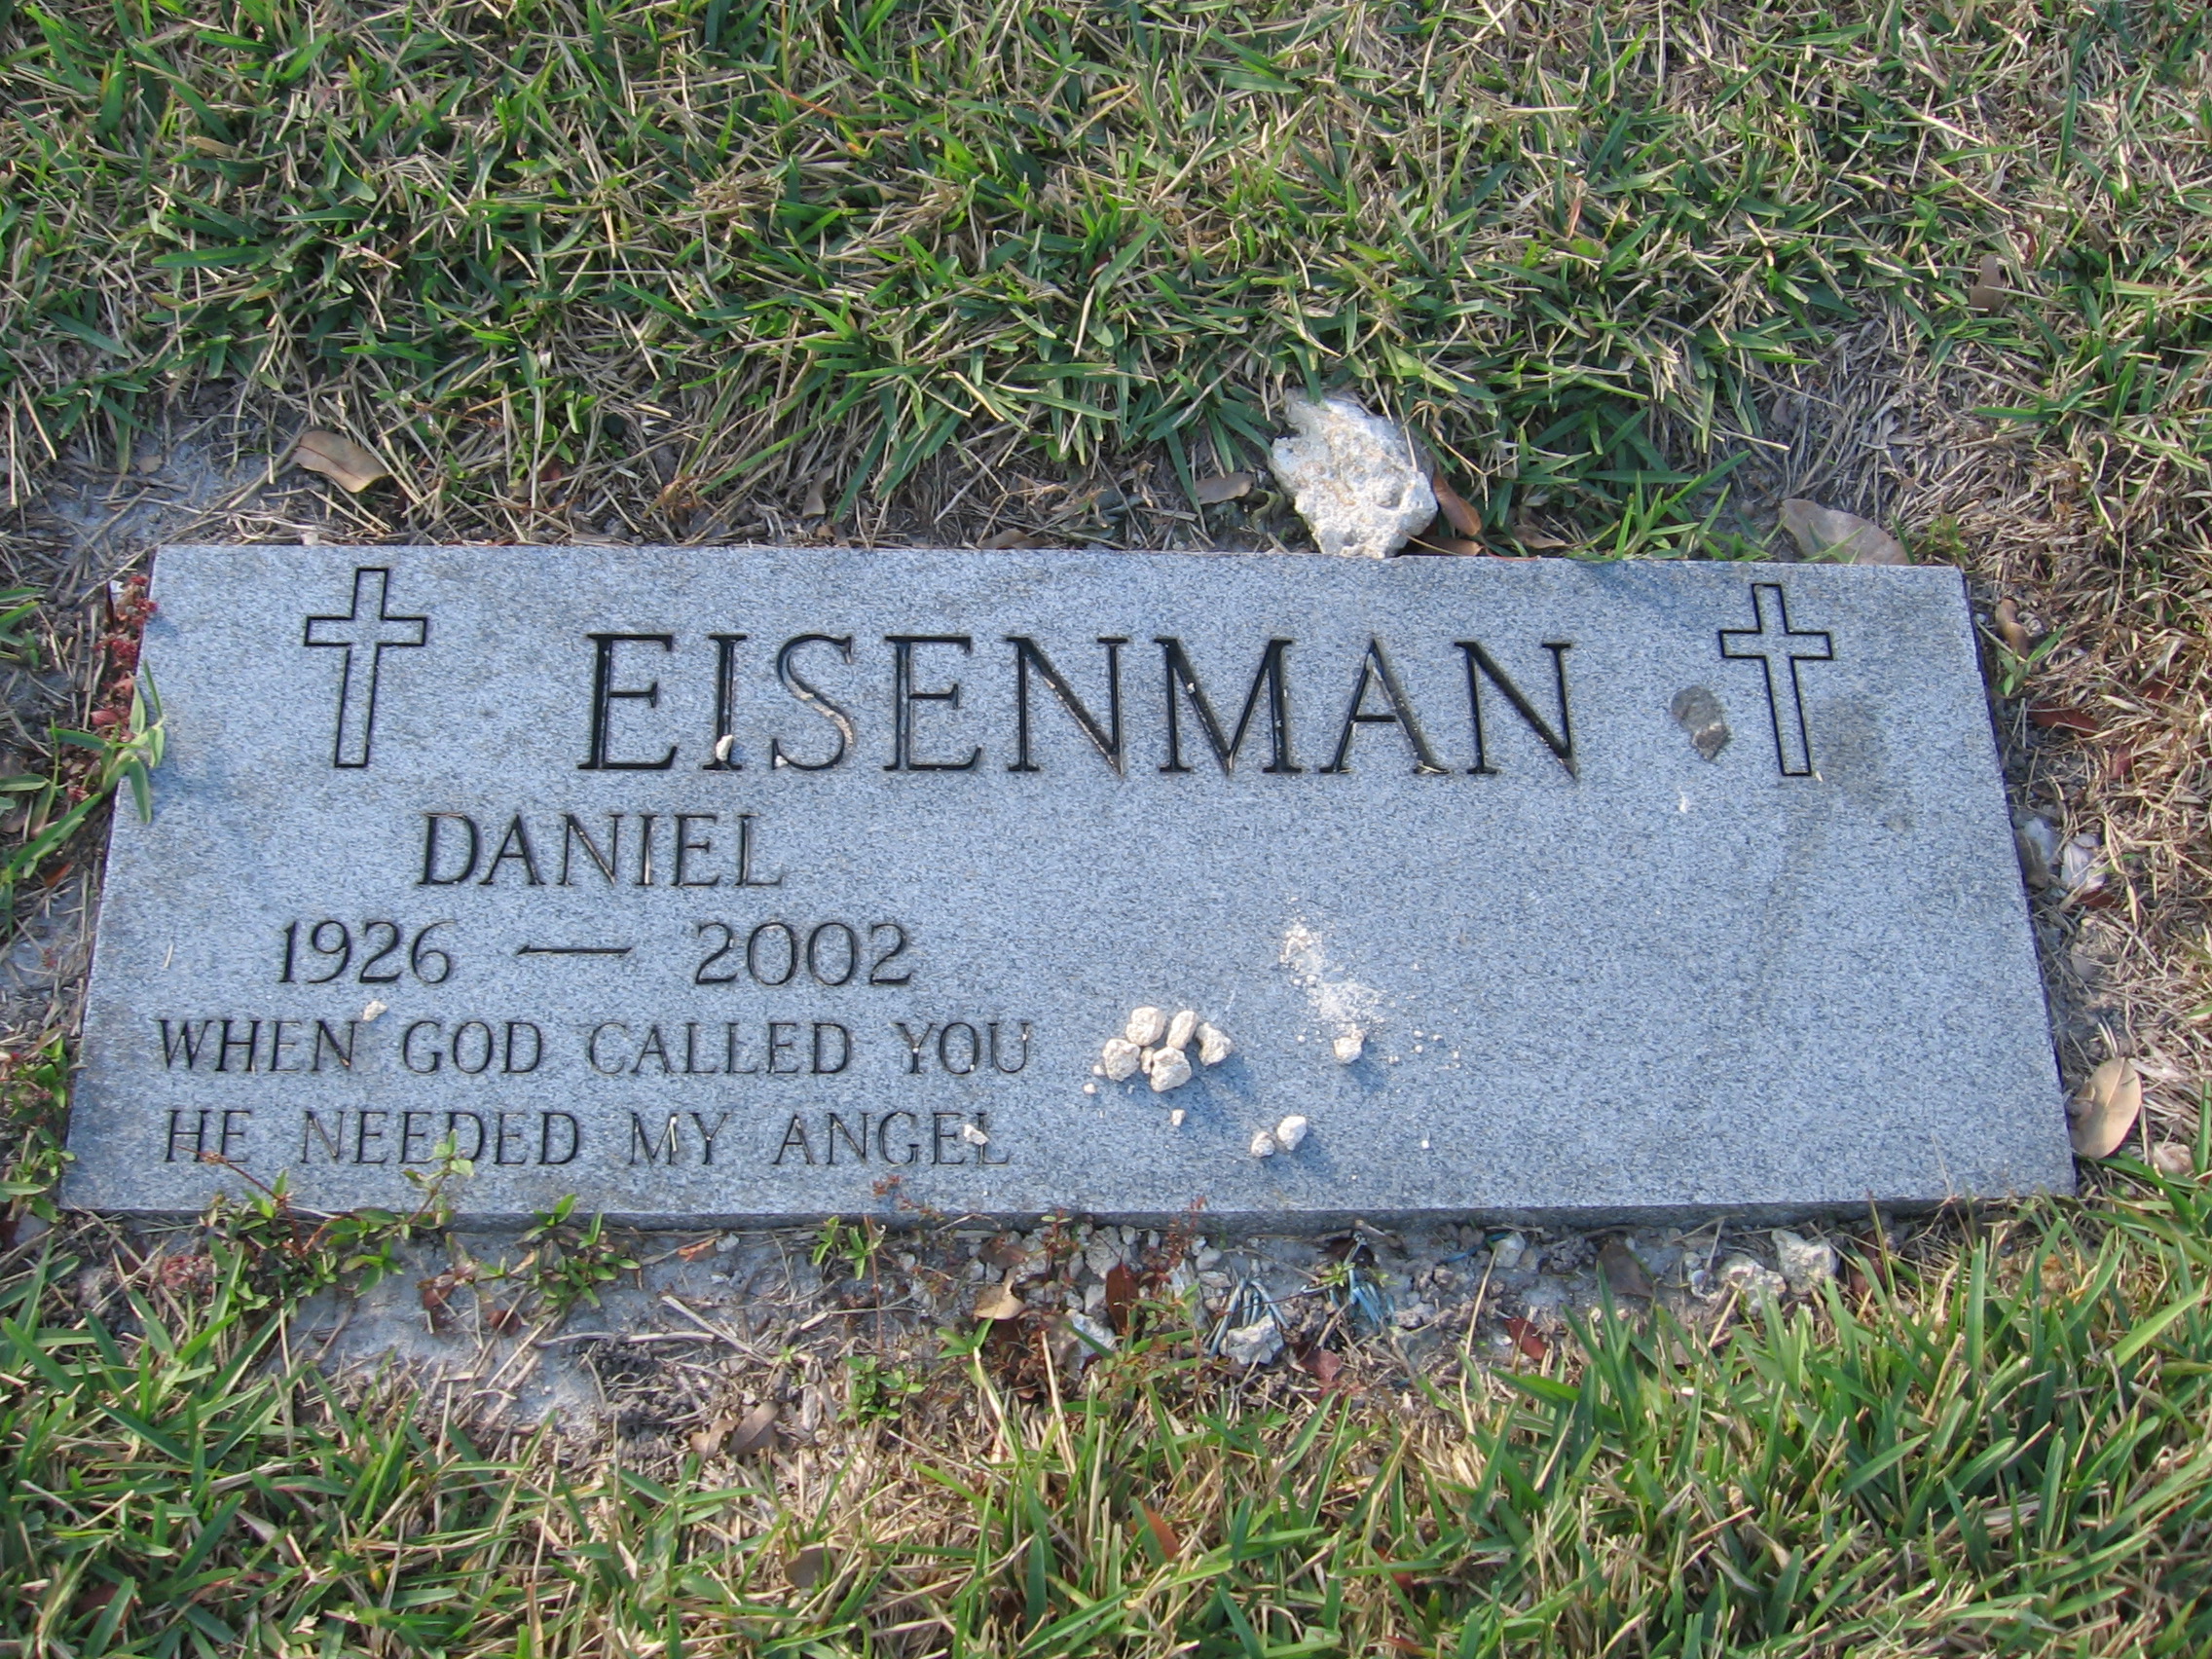 Daniel Eisenman